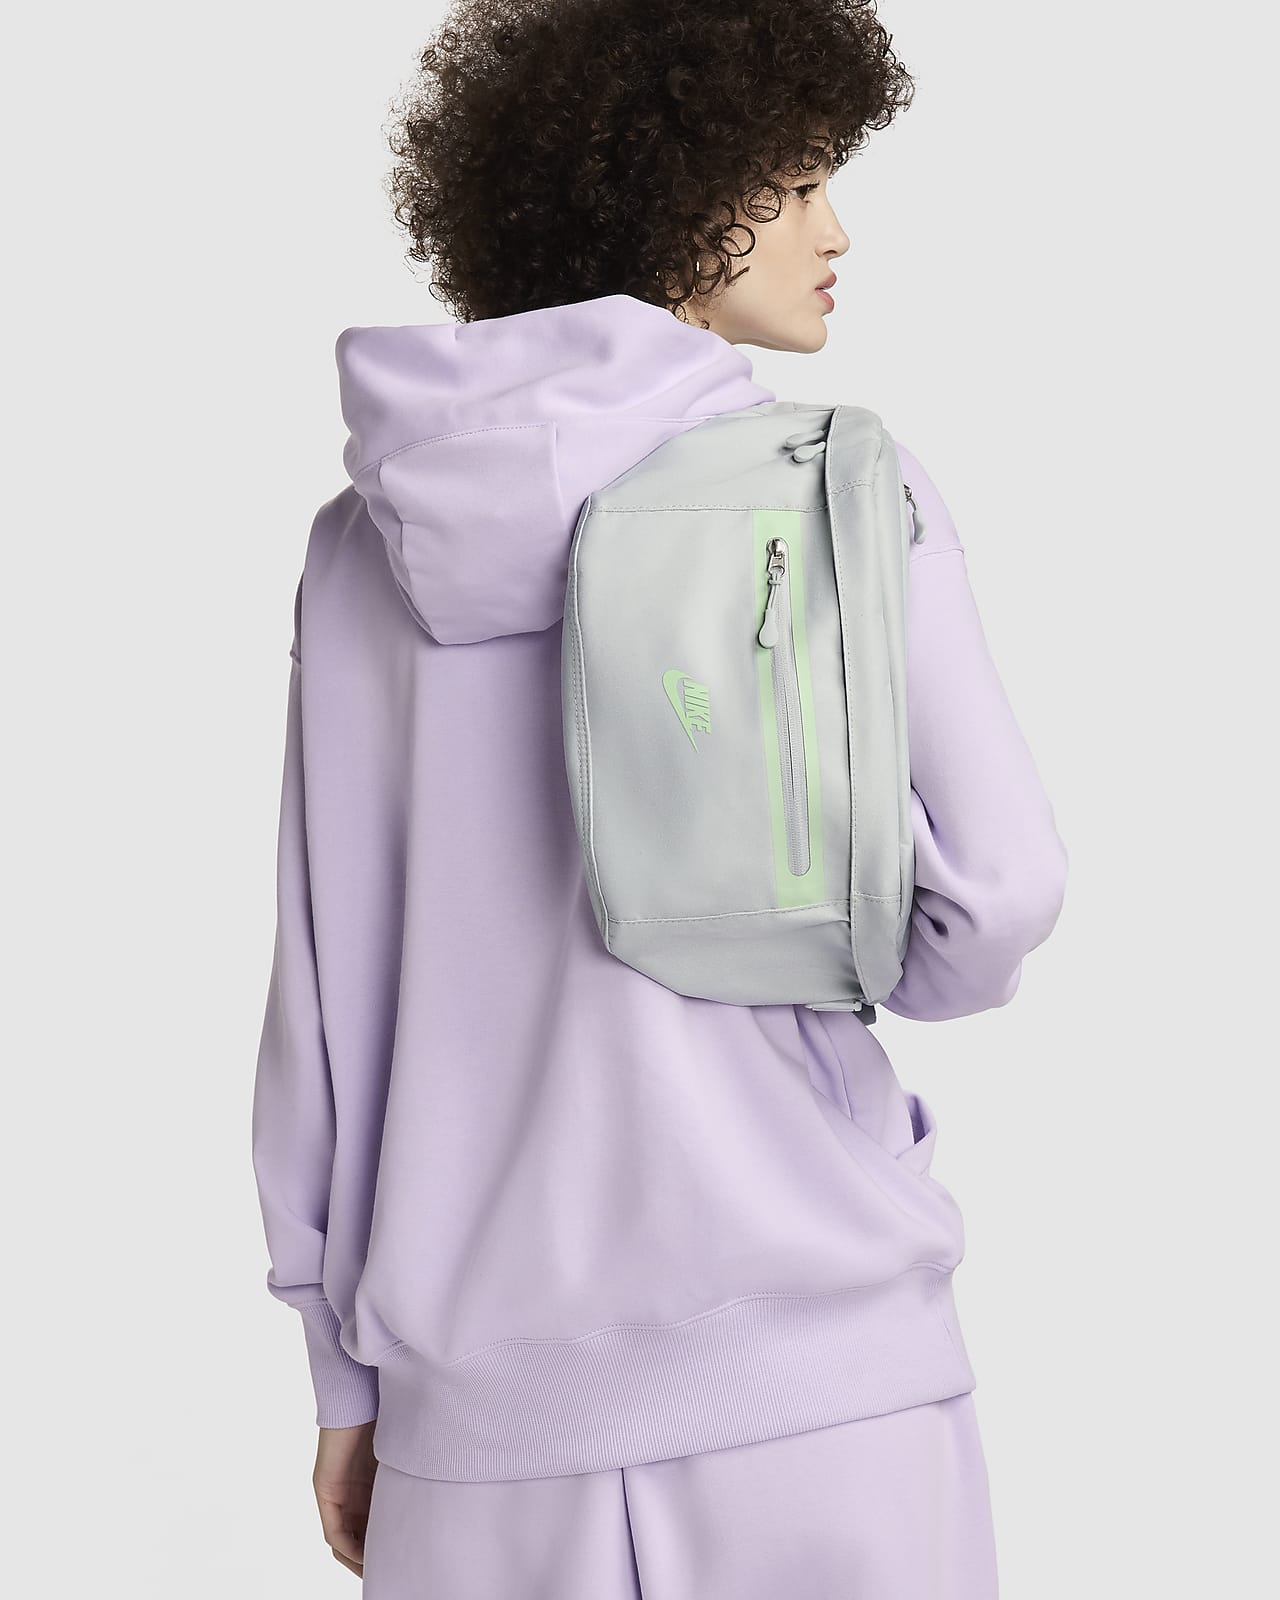 Nike Elemental Premium Fanny Pack (8L)